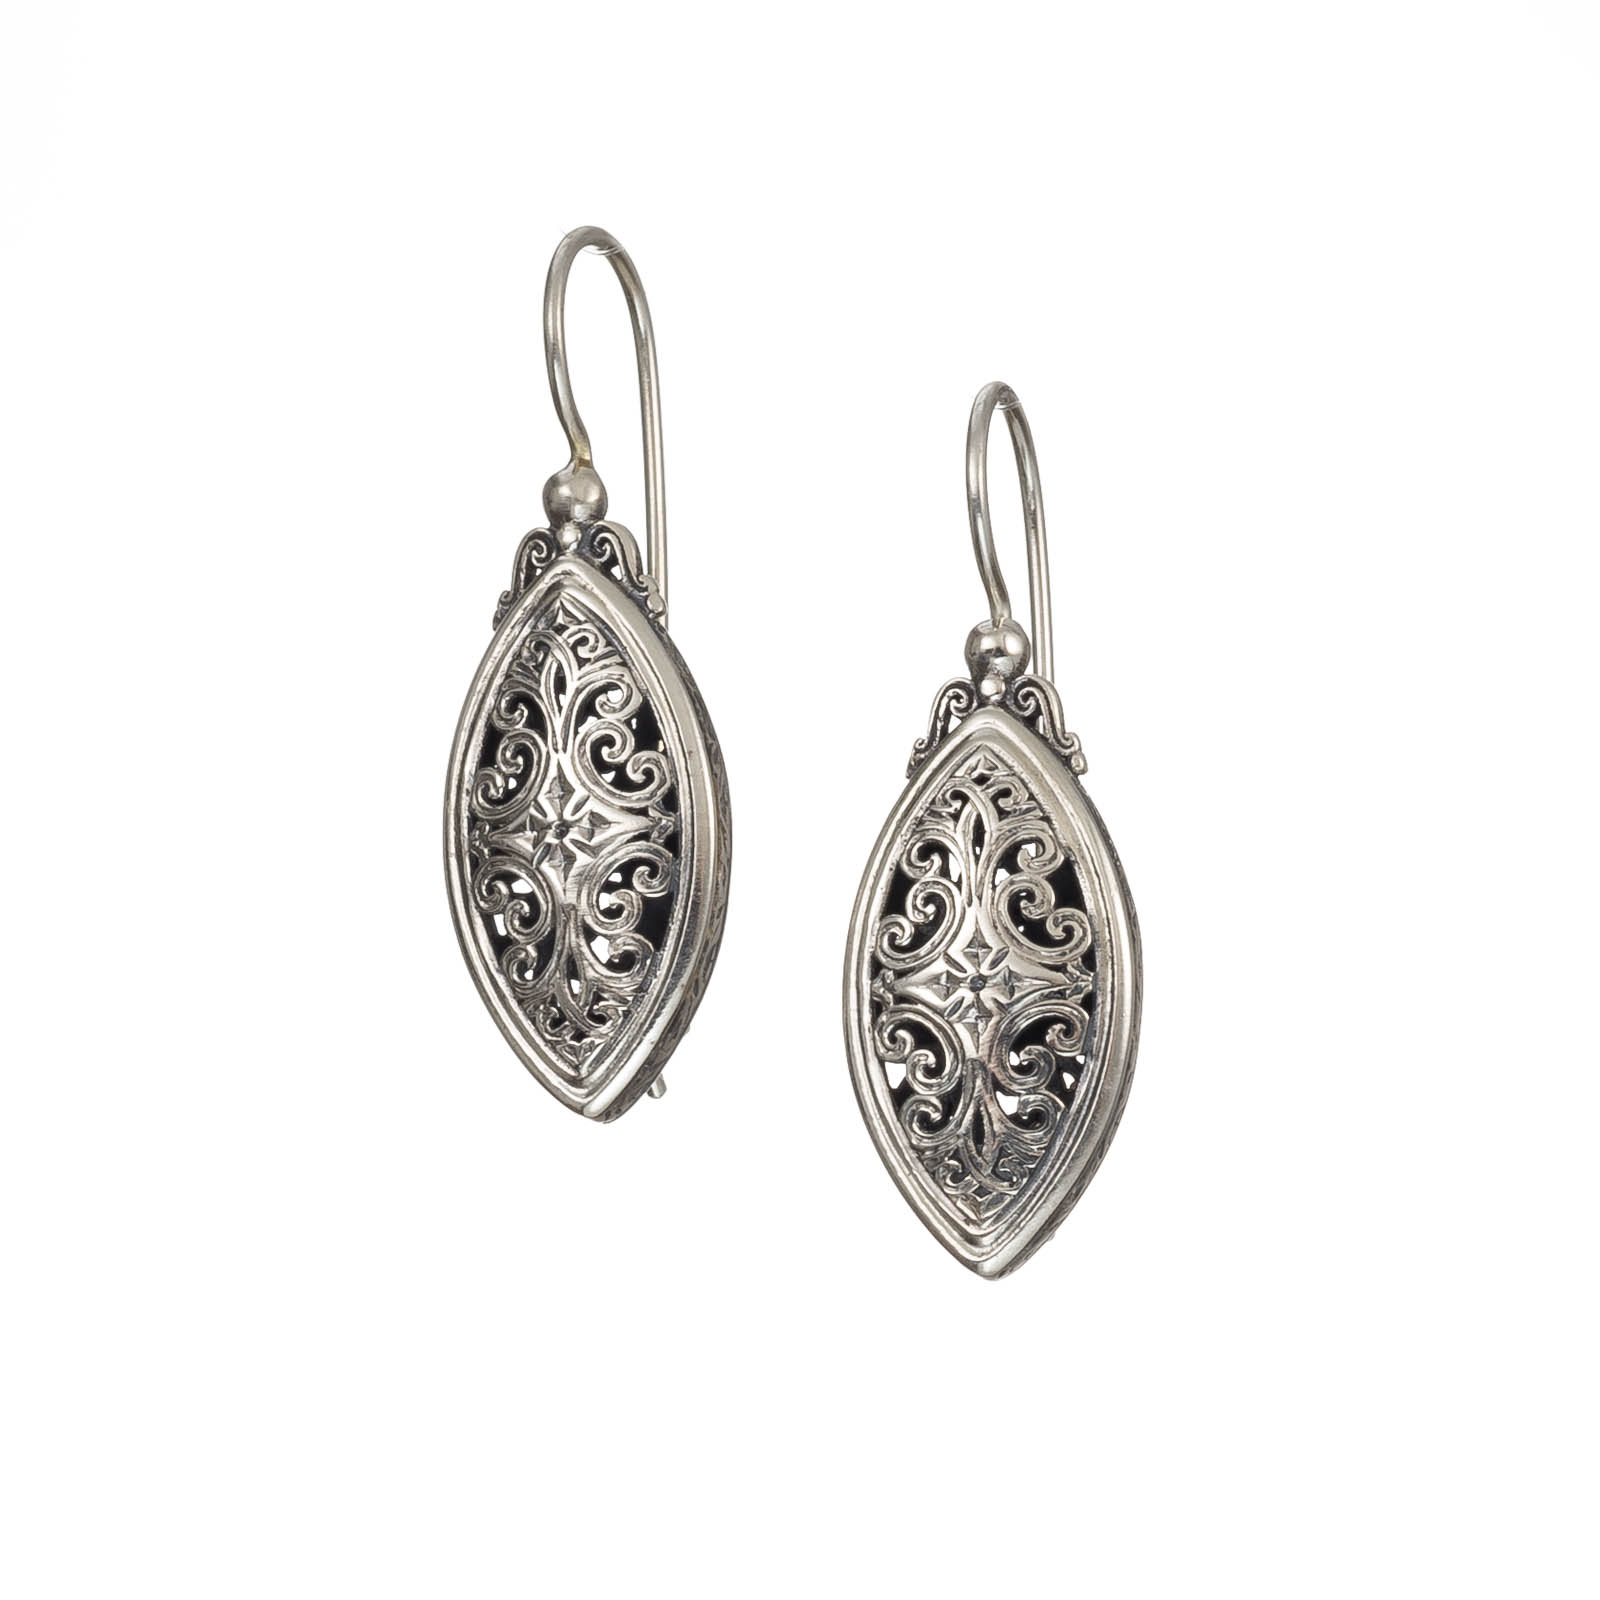 Handmade byzantine earrings with filigree